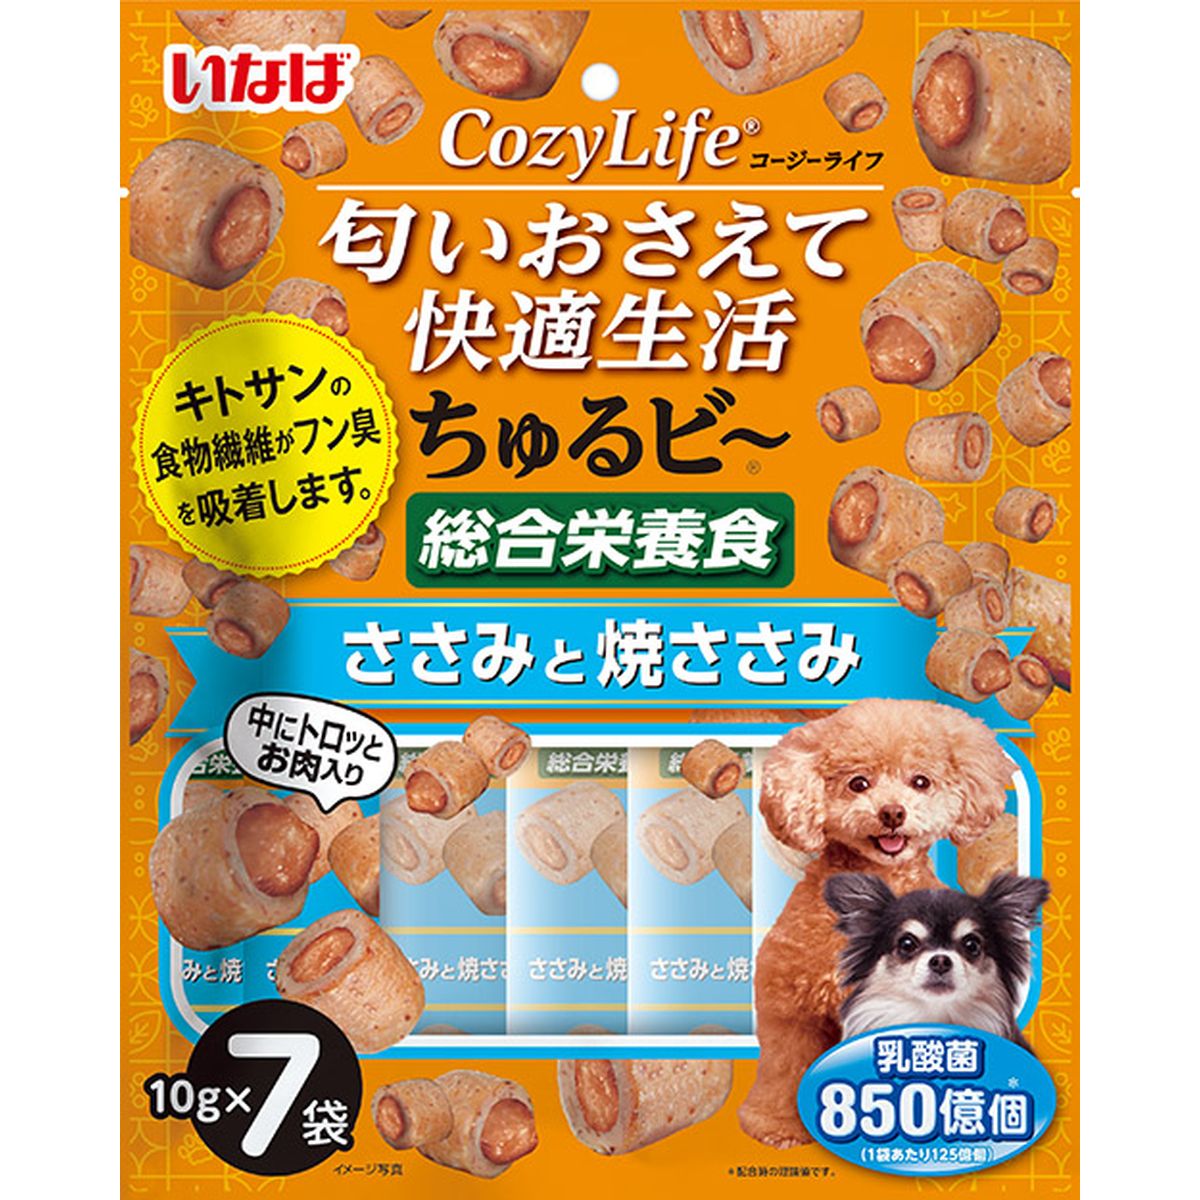 CozyLife チュルビー総合栄養食 ササミト焼ササミ 10g×7袋×16